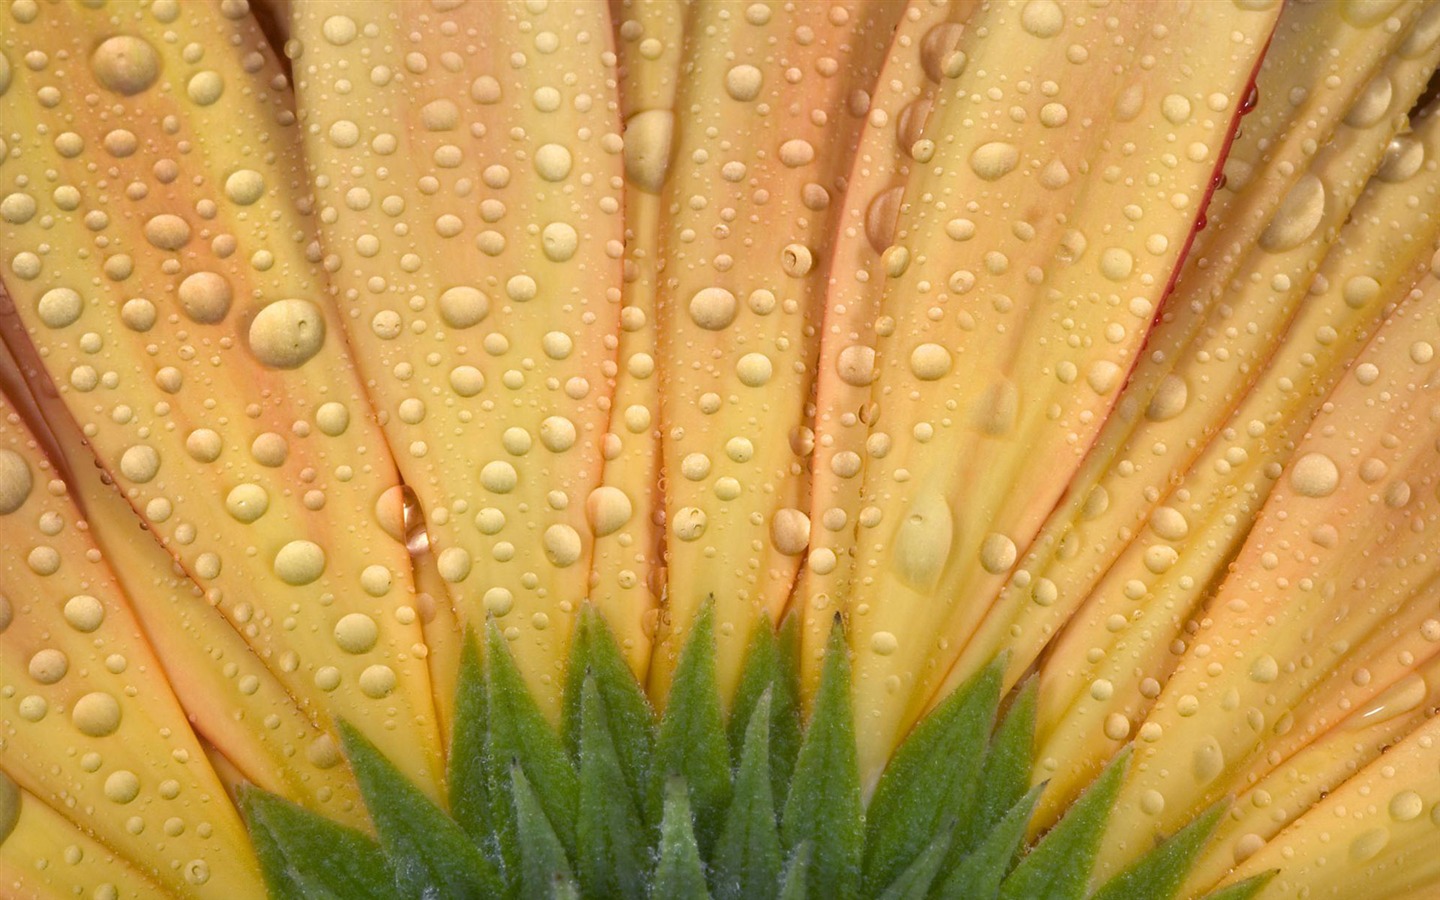 Flowers close-up (4) #18 - 1440x900